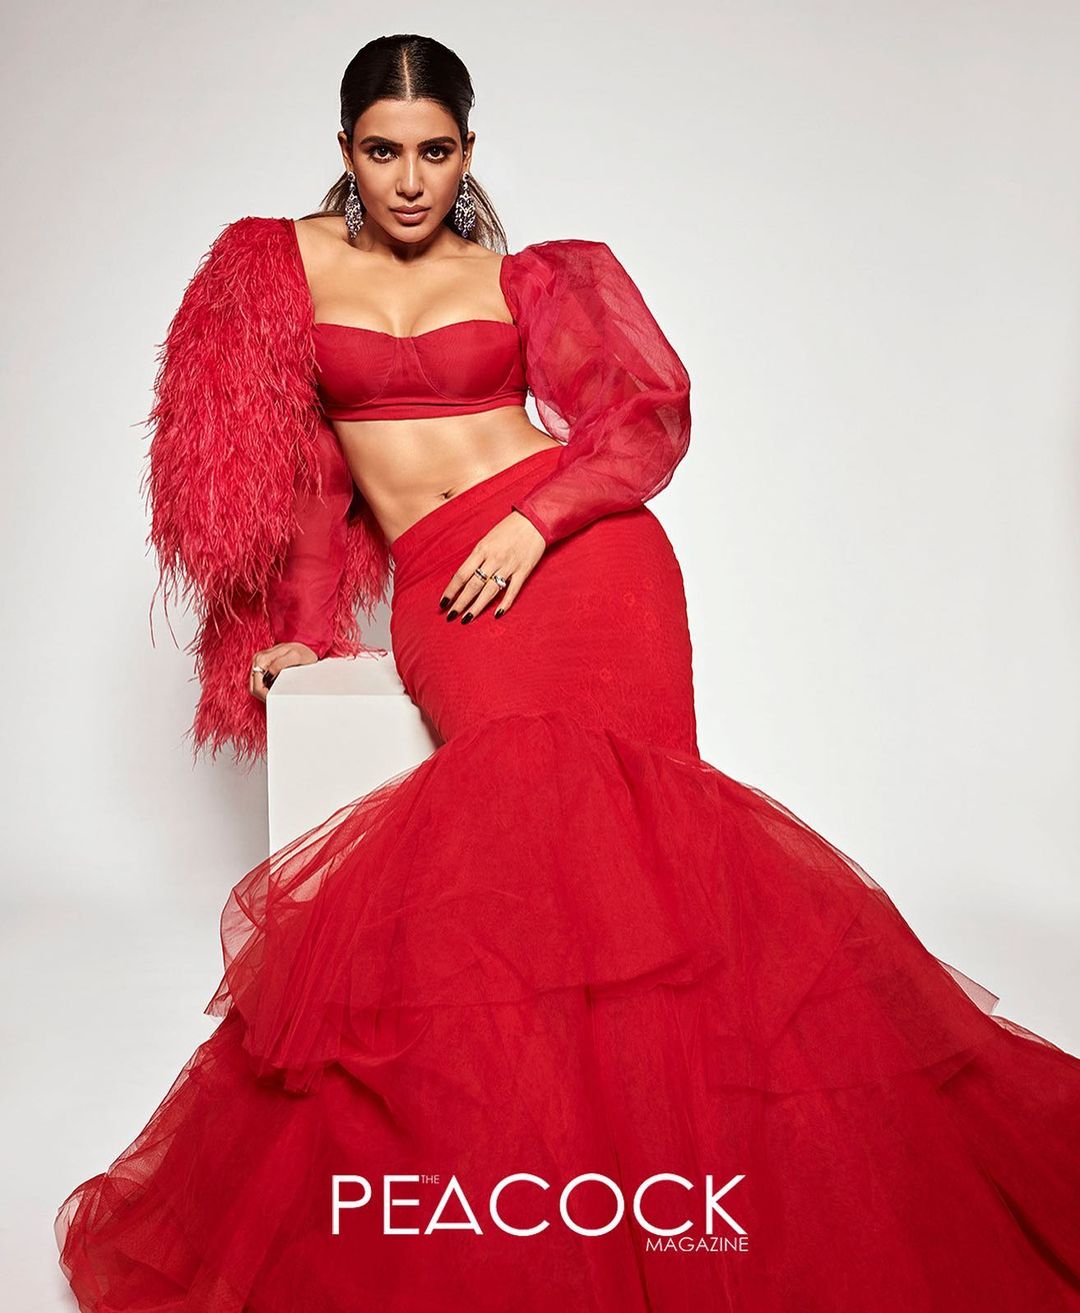 Samantha Ruth Prabhu looks flamboyant in the deep red mermaid-style lehenga